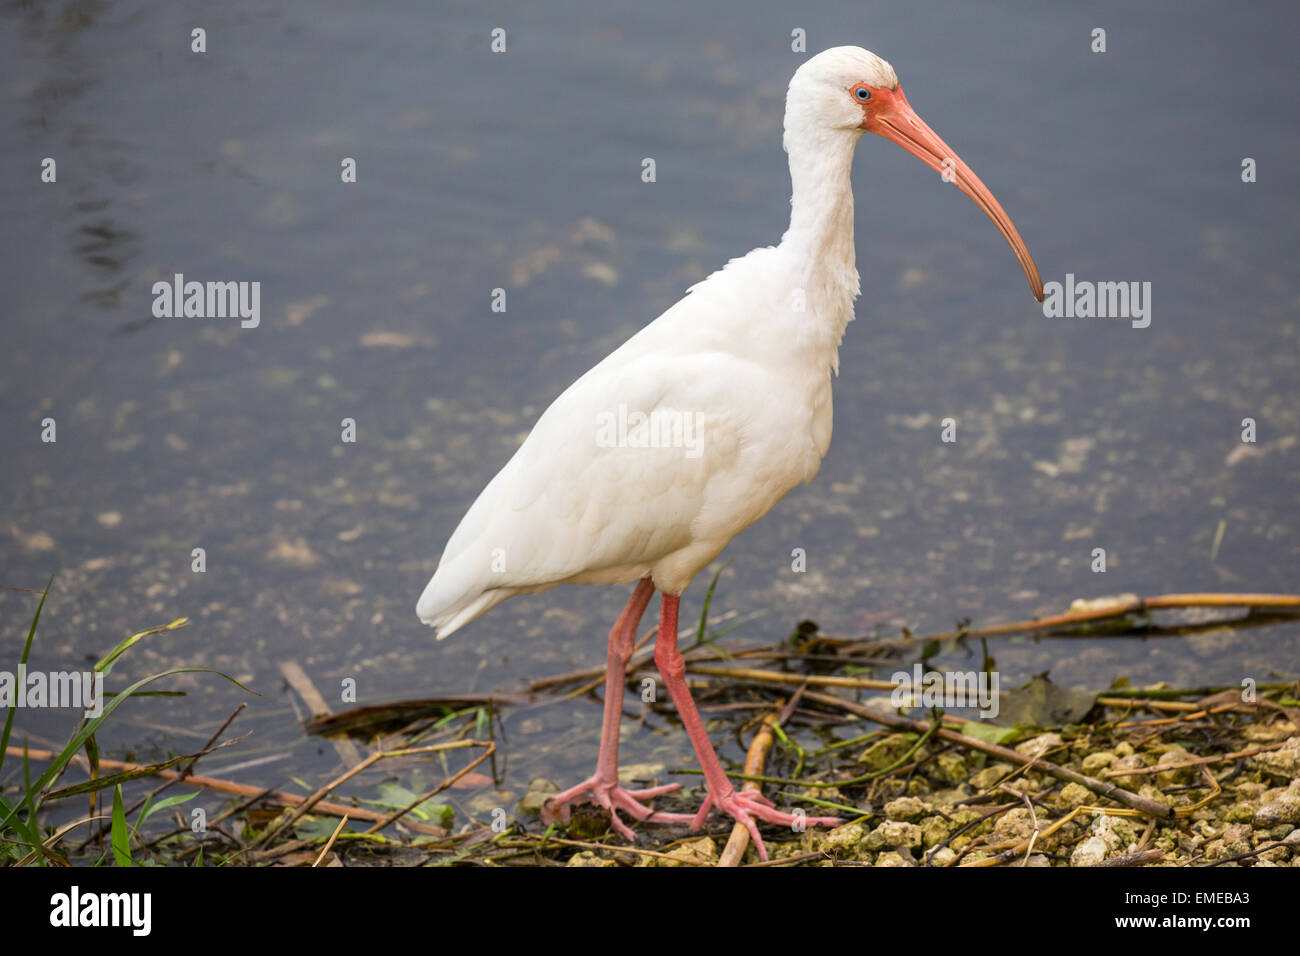 American white ibis (Eudocimus albus) at Eco Pond in the Florida Everglades National Park. Stock Photo